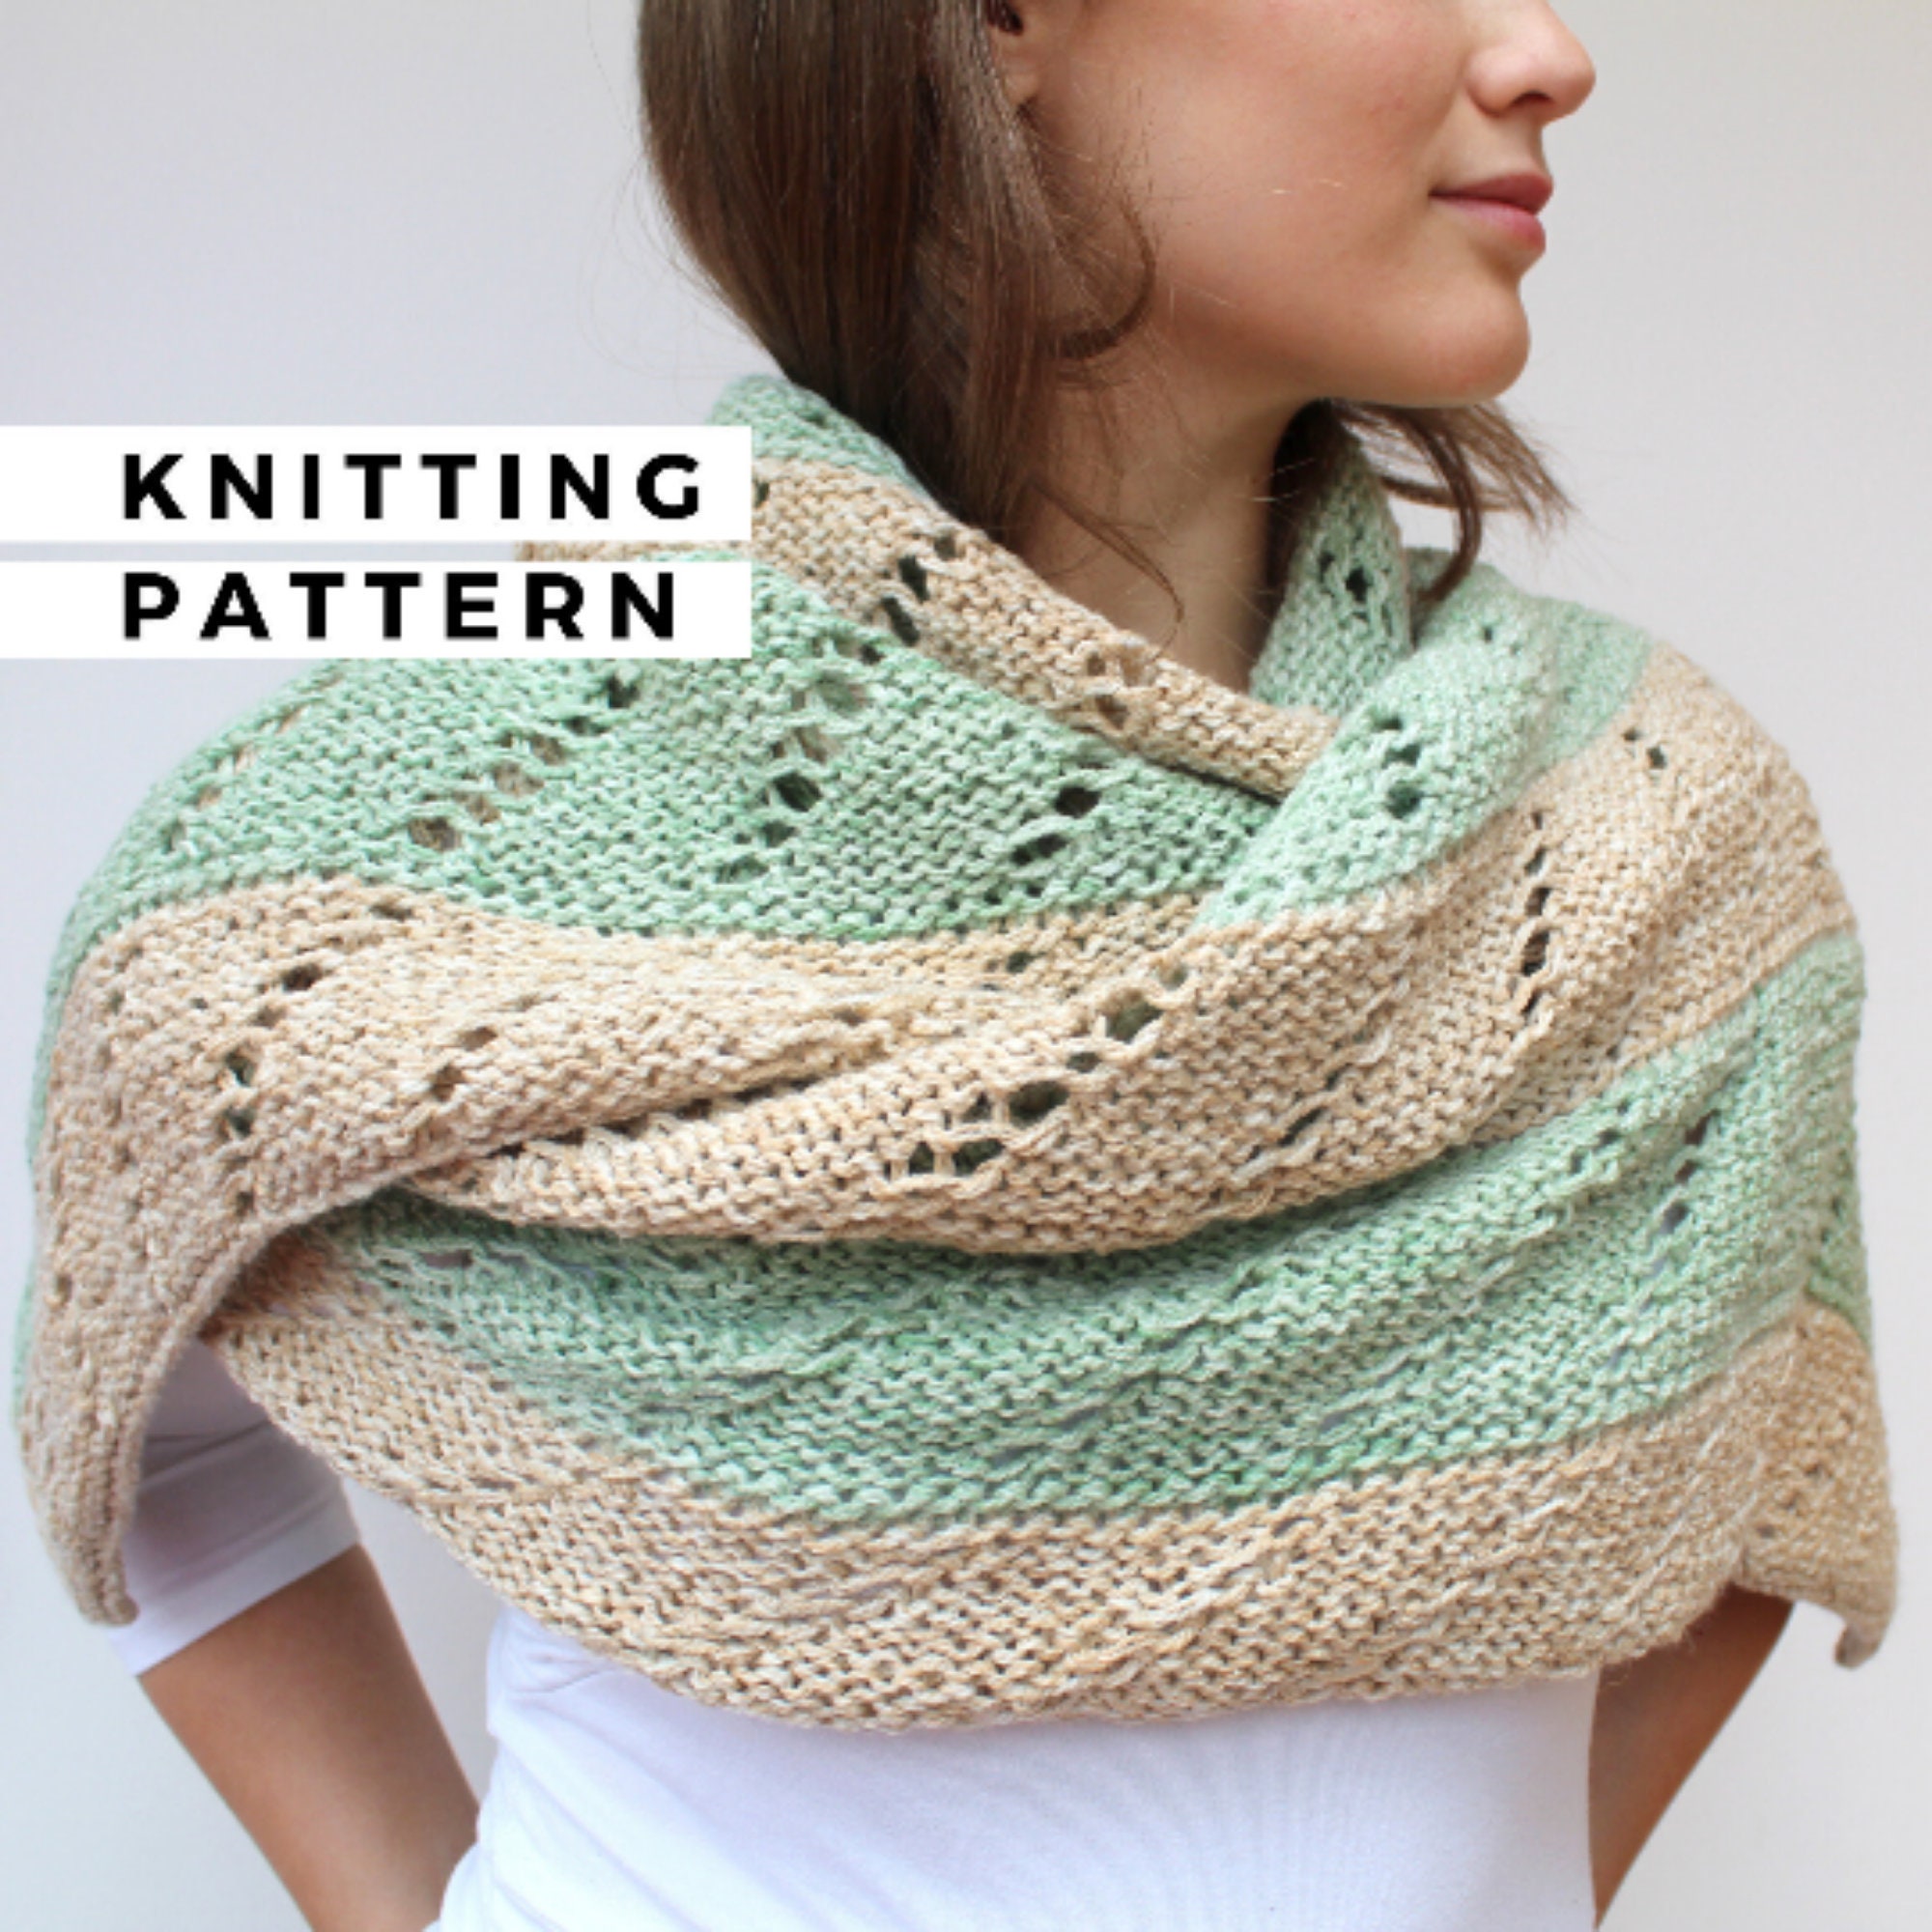 Non-metallic gold yarn for crochet shawl - knit wrap stole